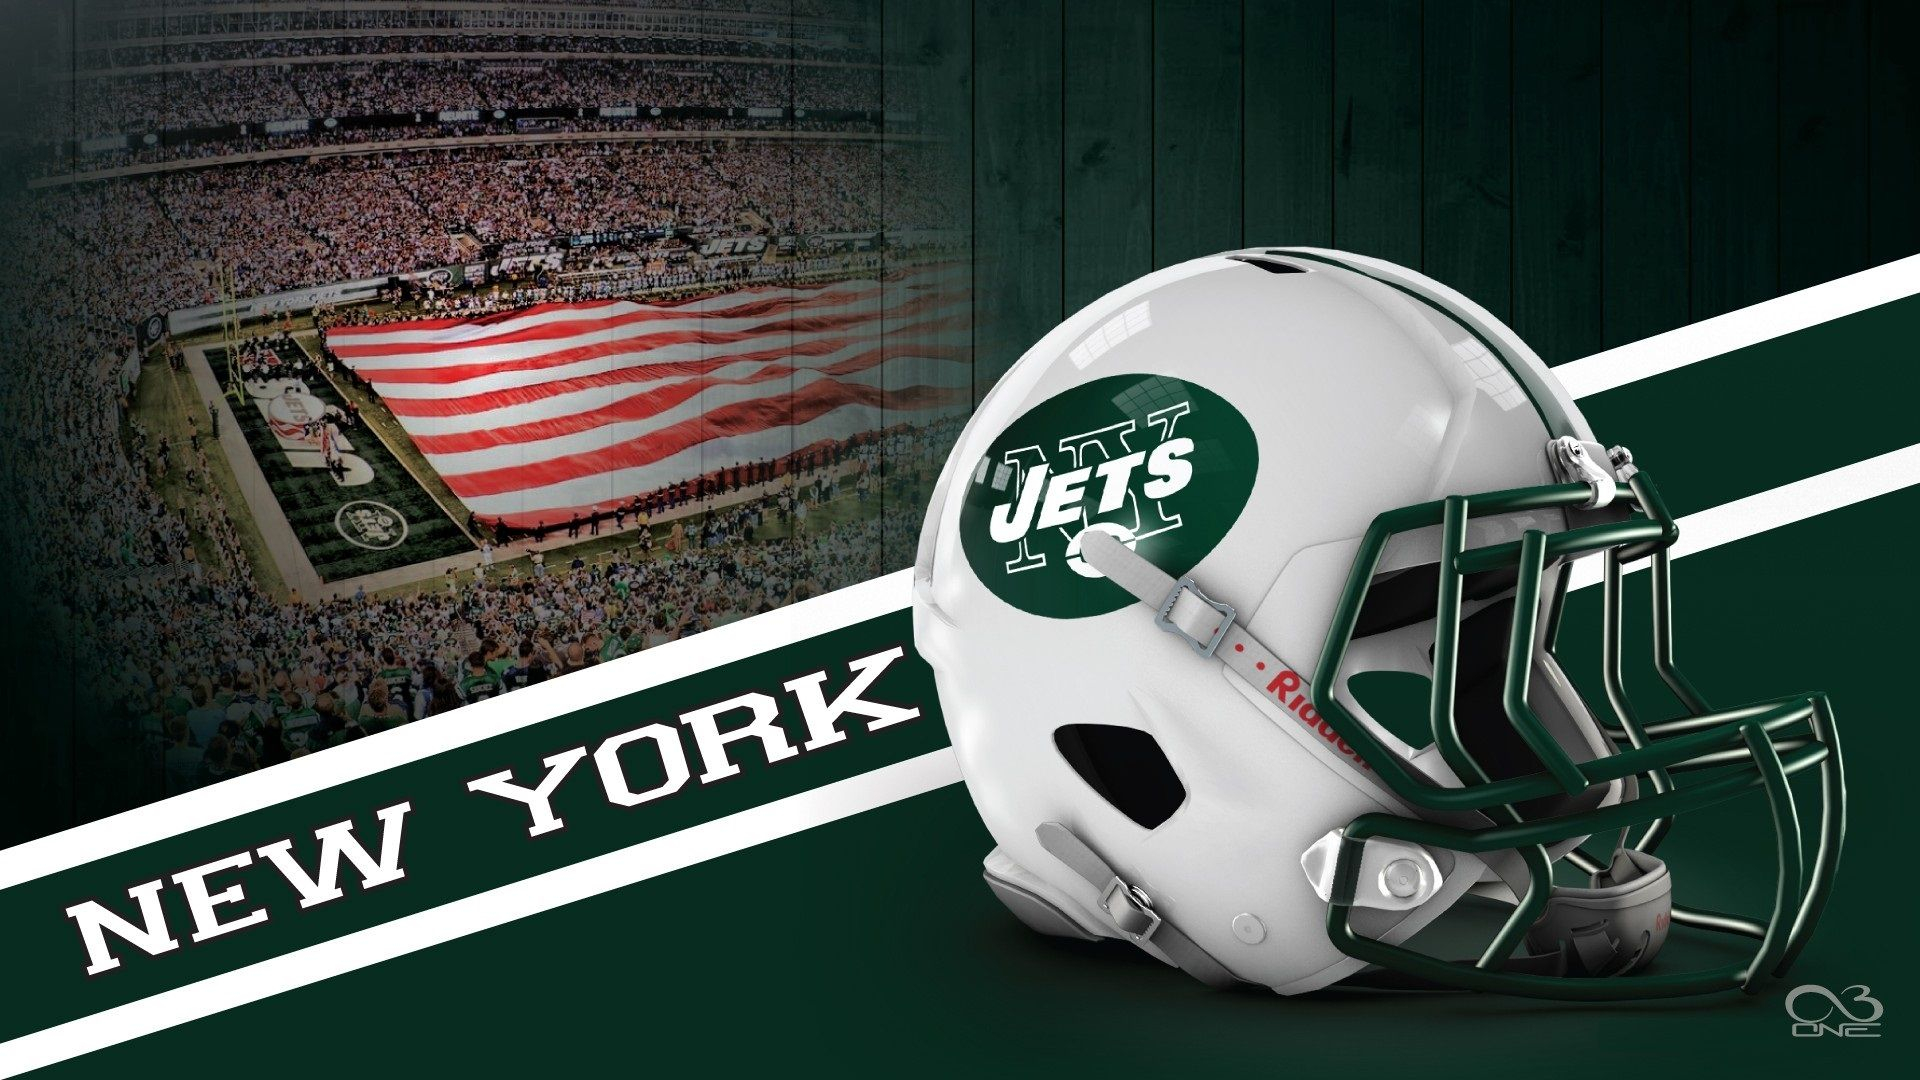 1920x1080 New York Jets For Desktop Wallpaper 2022 NFL Football Wallpapers | New york jets, Ny jets, New york jets football